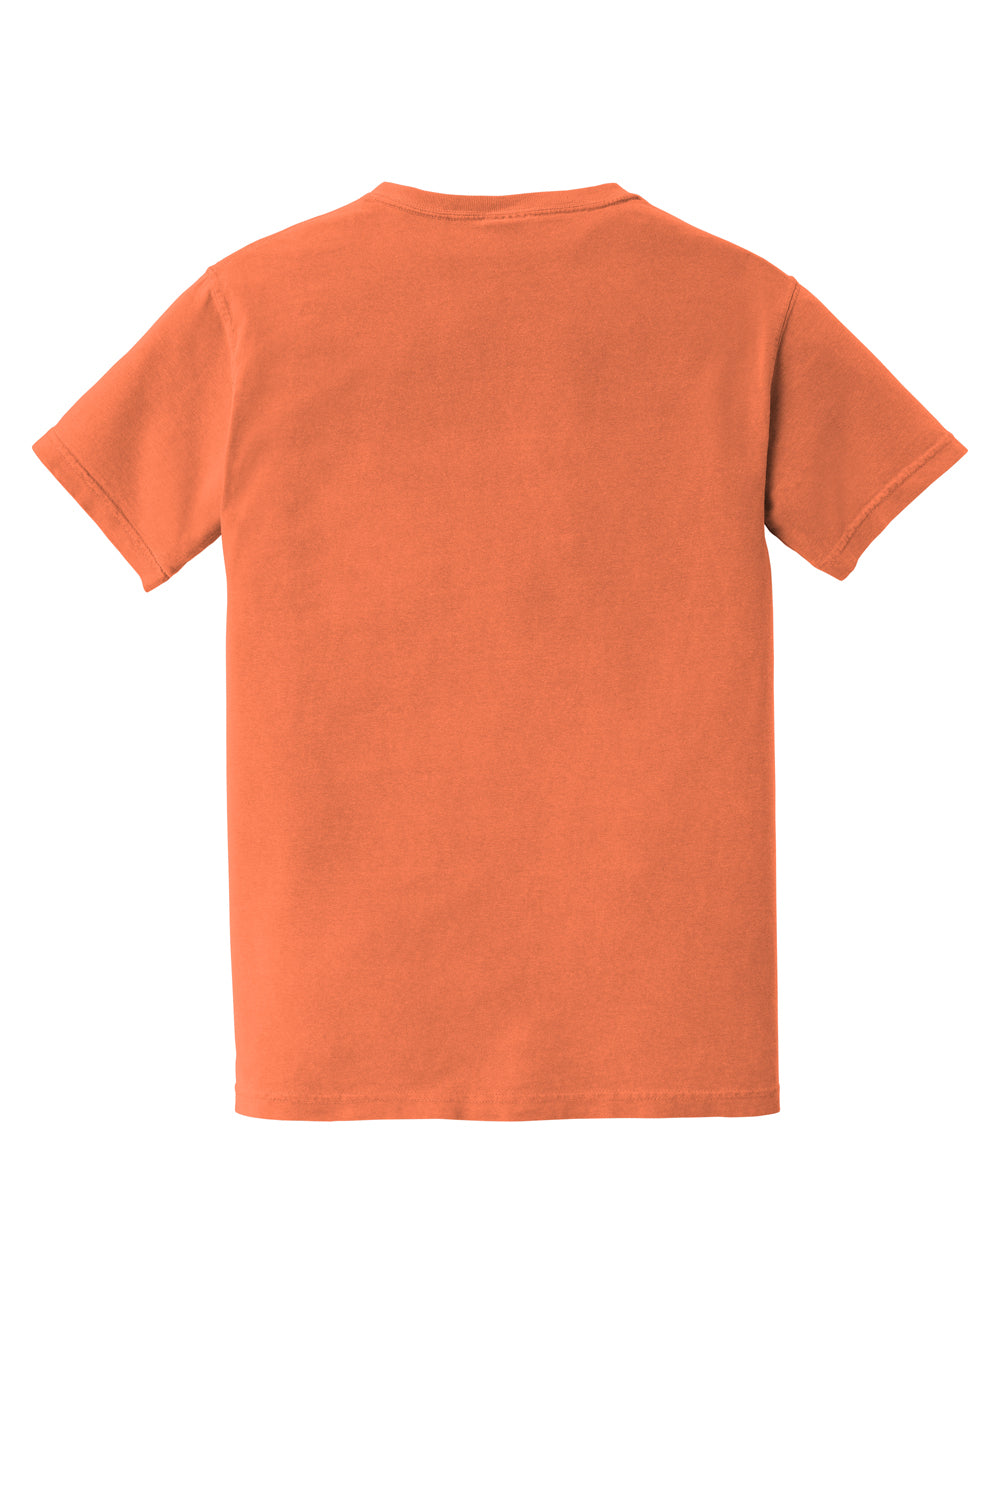 Comfort Colors Mens Short Sleeve Crewneck T-Shirt w/ Pocket Melon Orange Flat Back